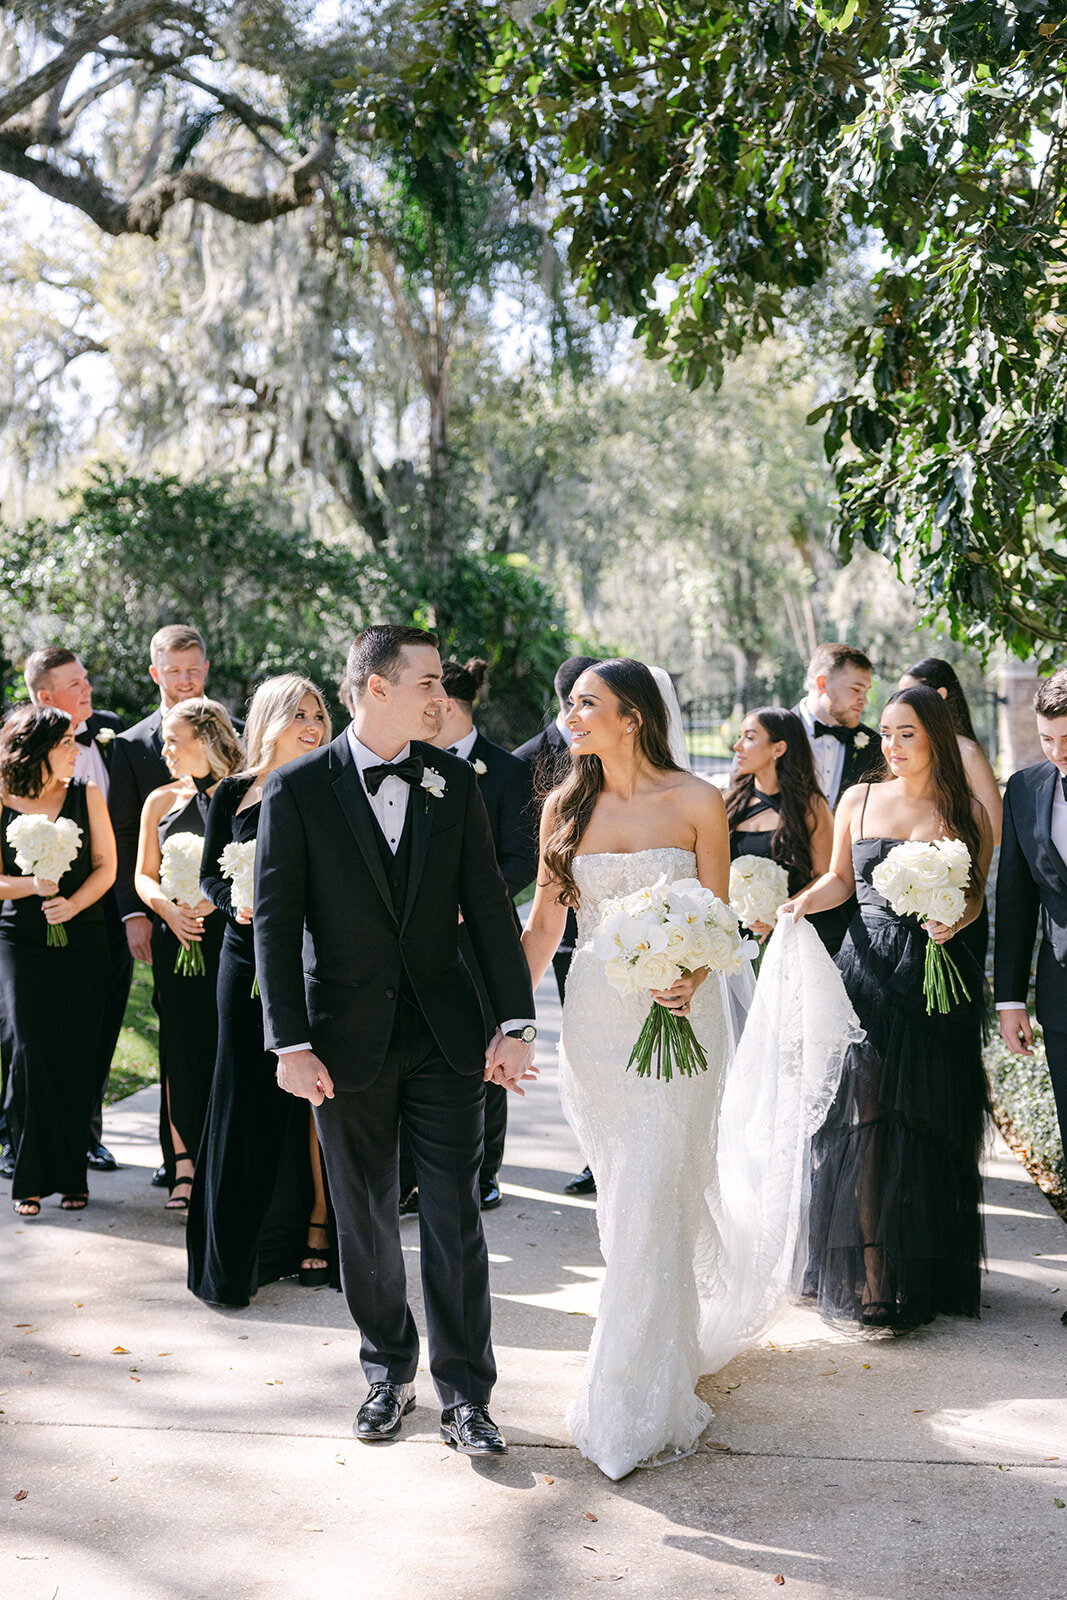 CORNELIA ZAISS PHOTOGRAPHY ASHLYN + RHETT WEDDING SNEAKS 36